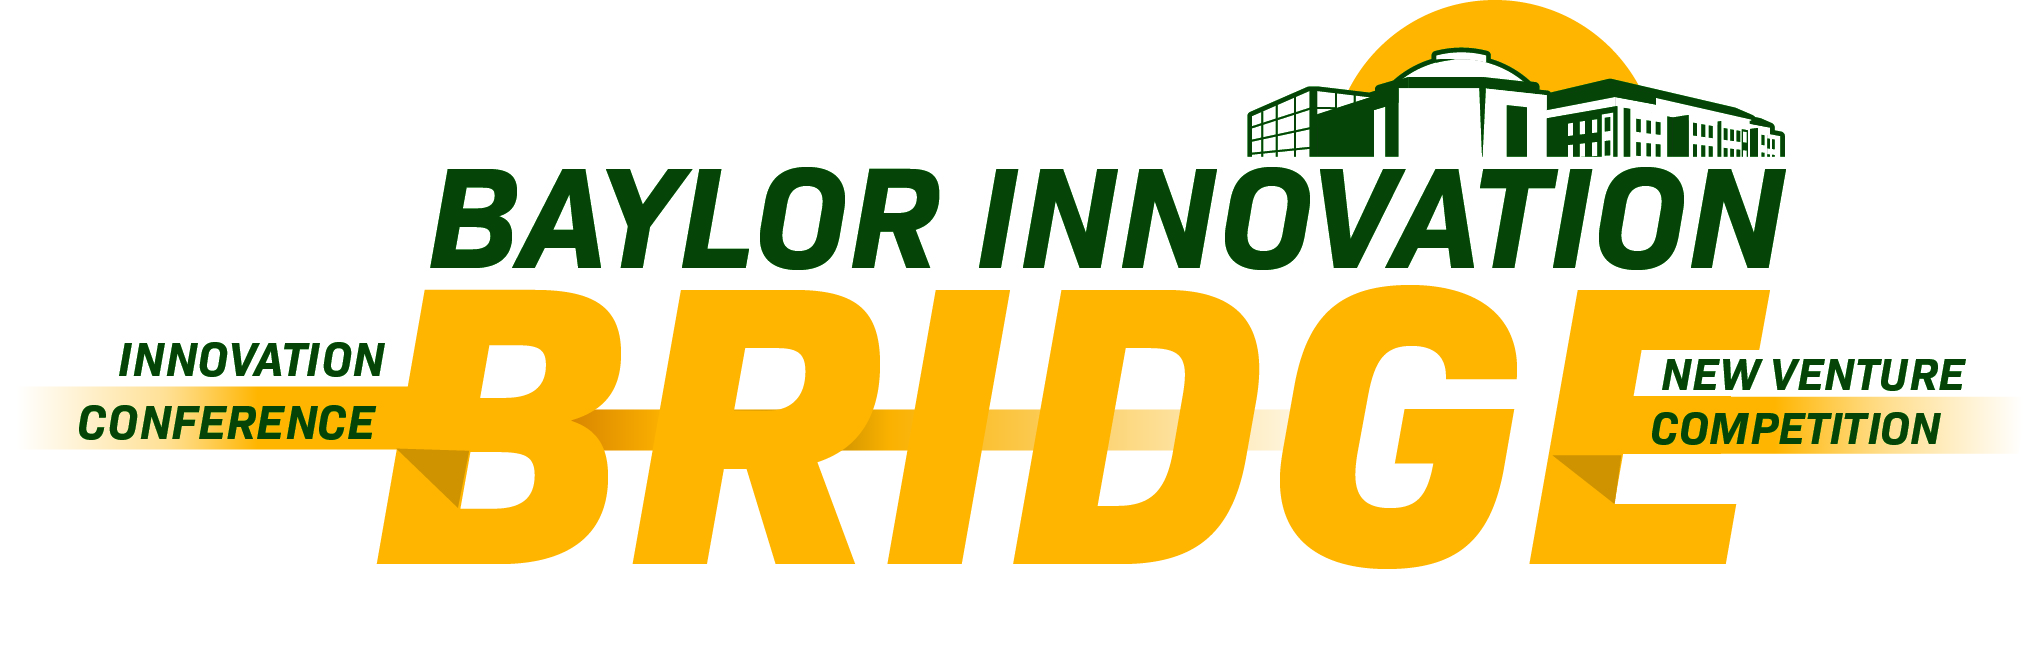 Baylor Innovation Bridge; Innovation Conference; New Venture Competition